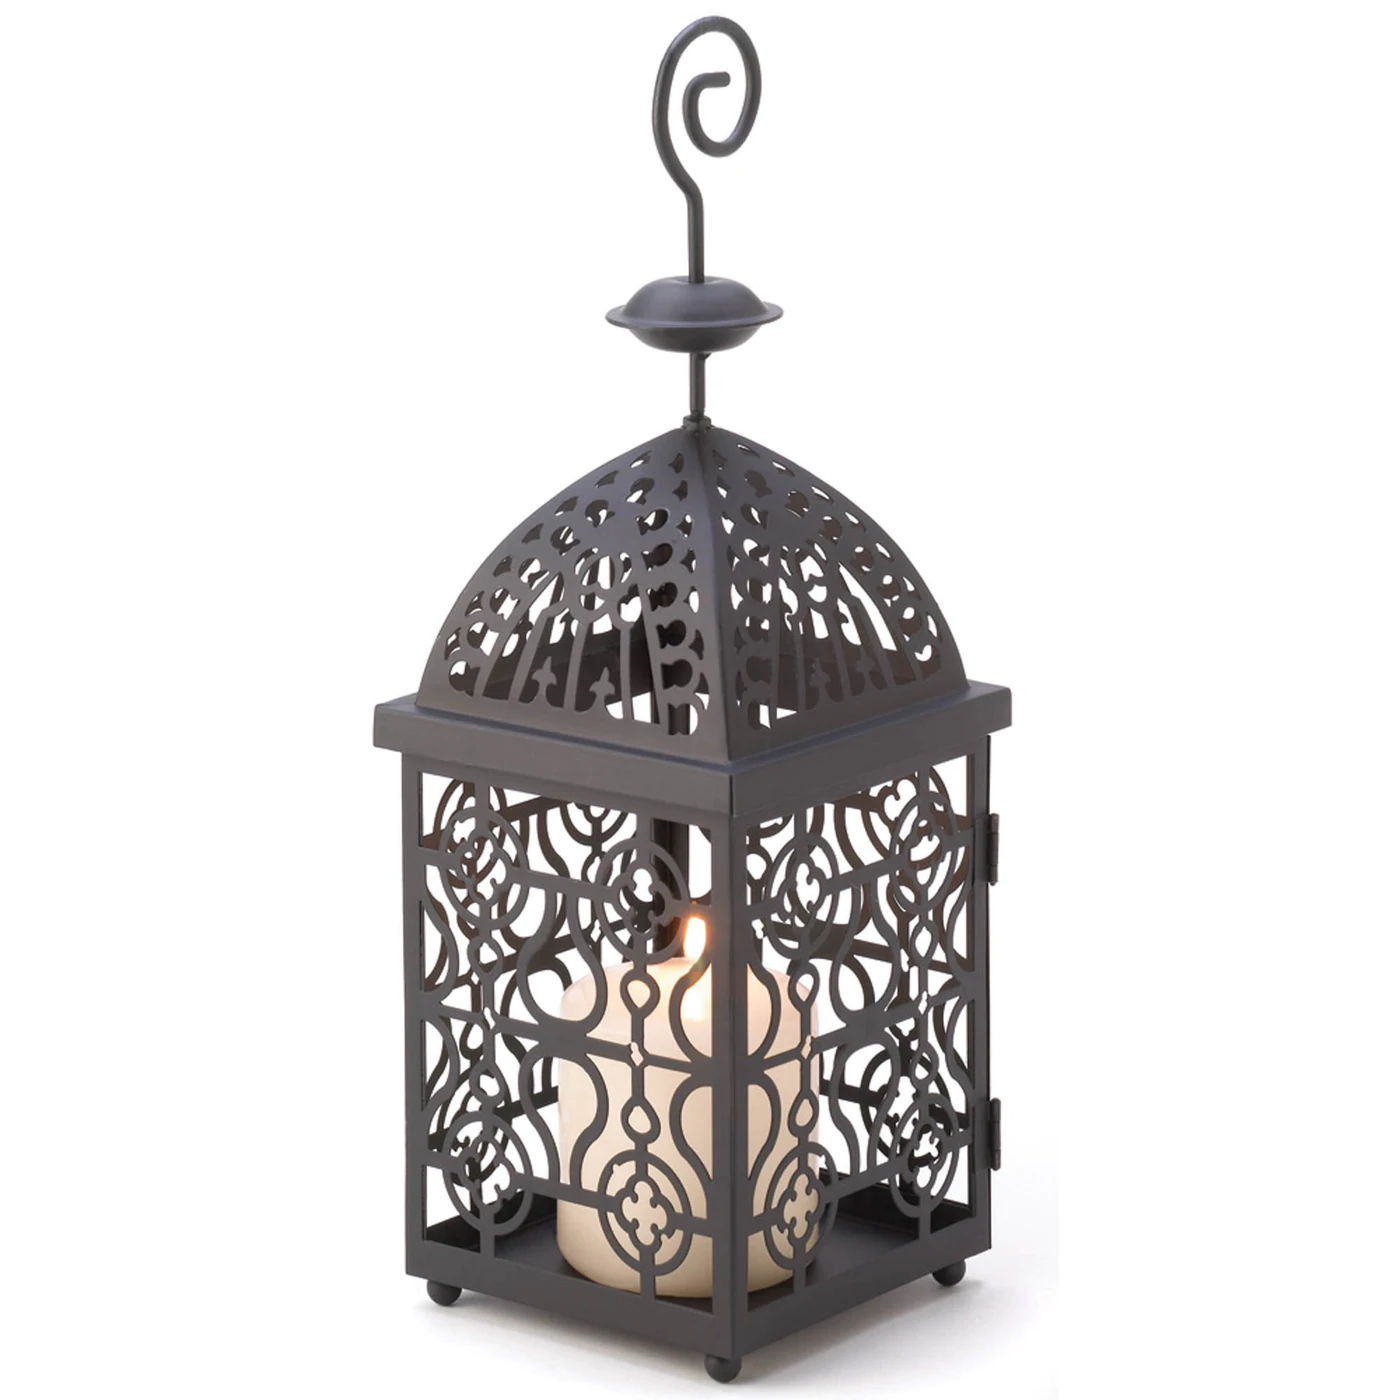 Moroccan Birdcage Candle Lantern - $24.54